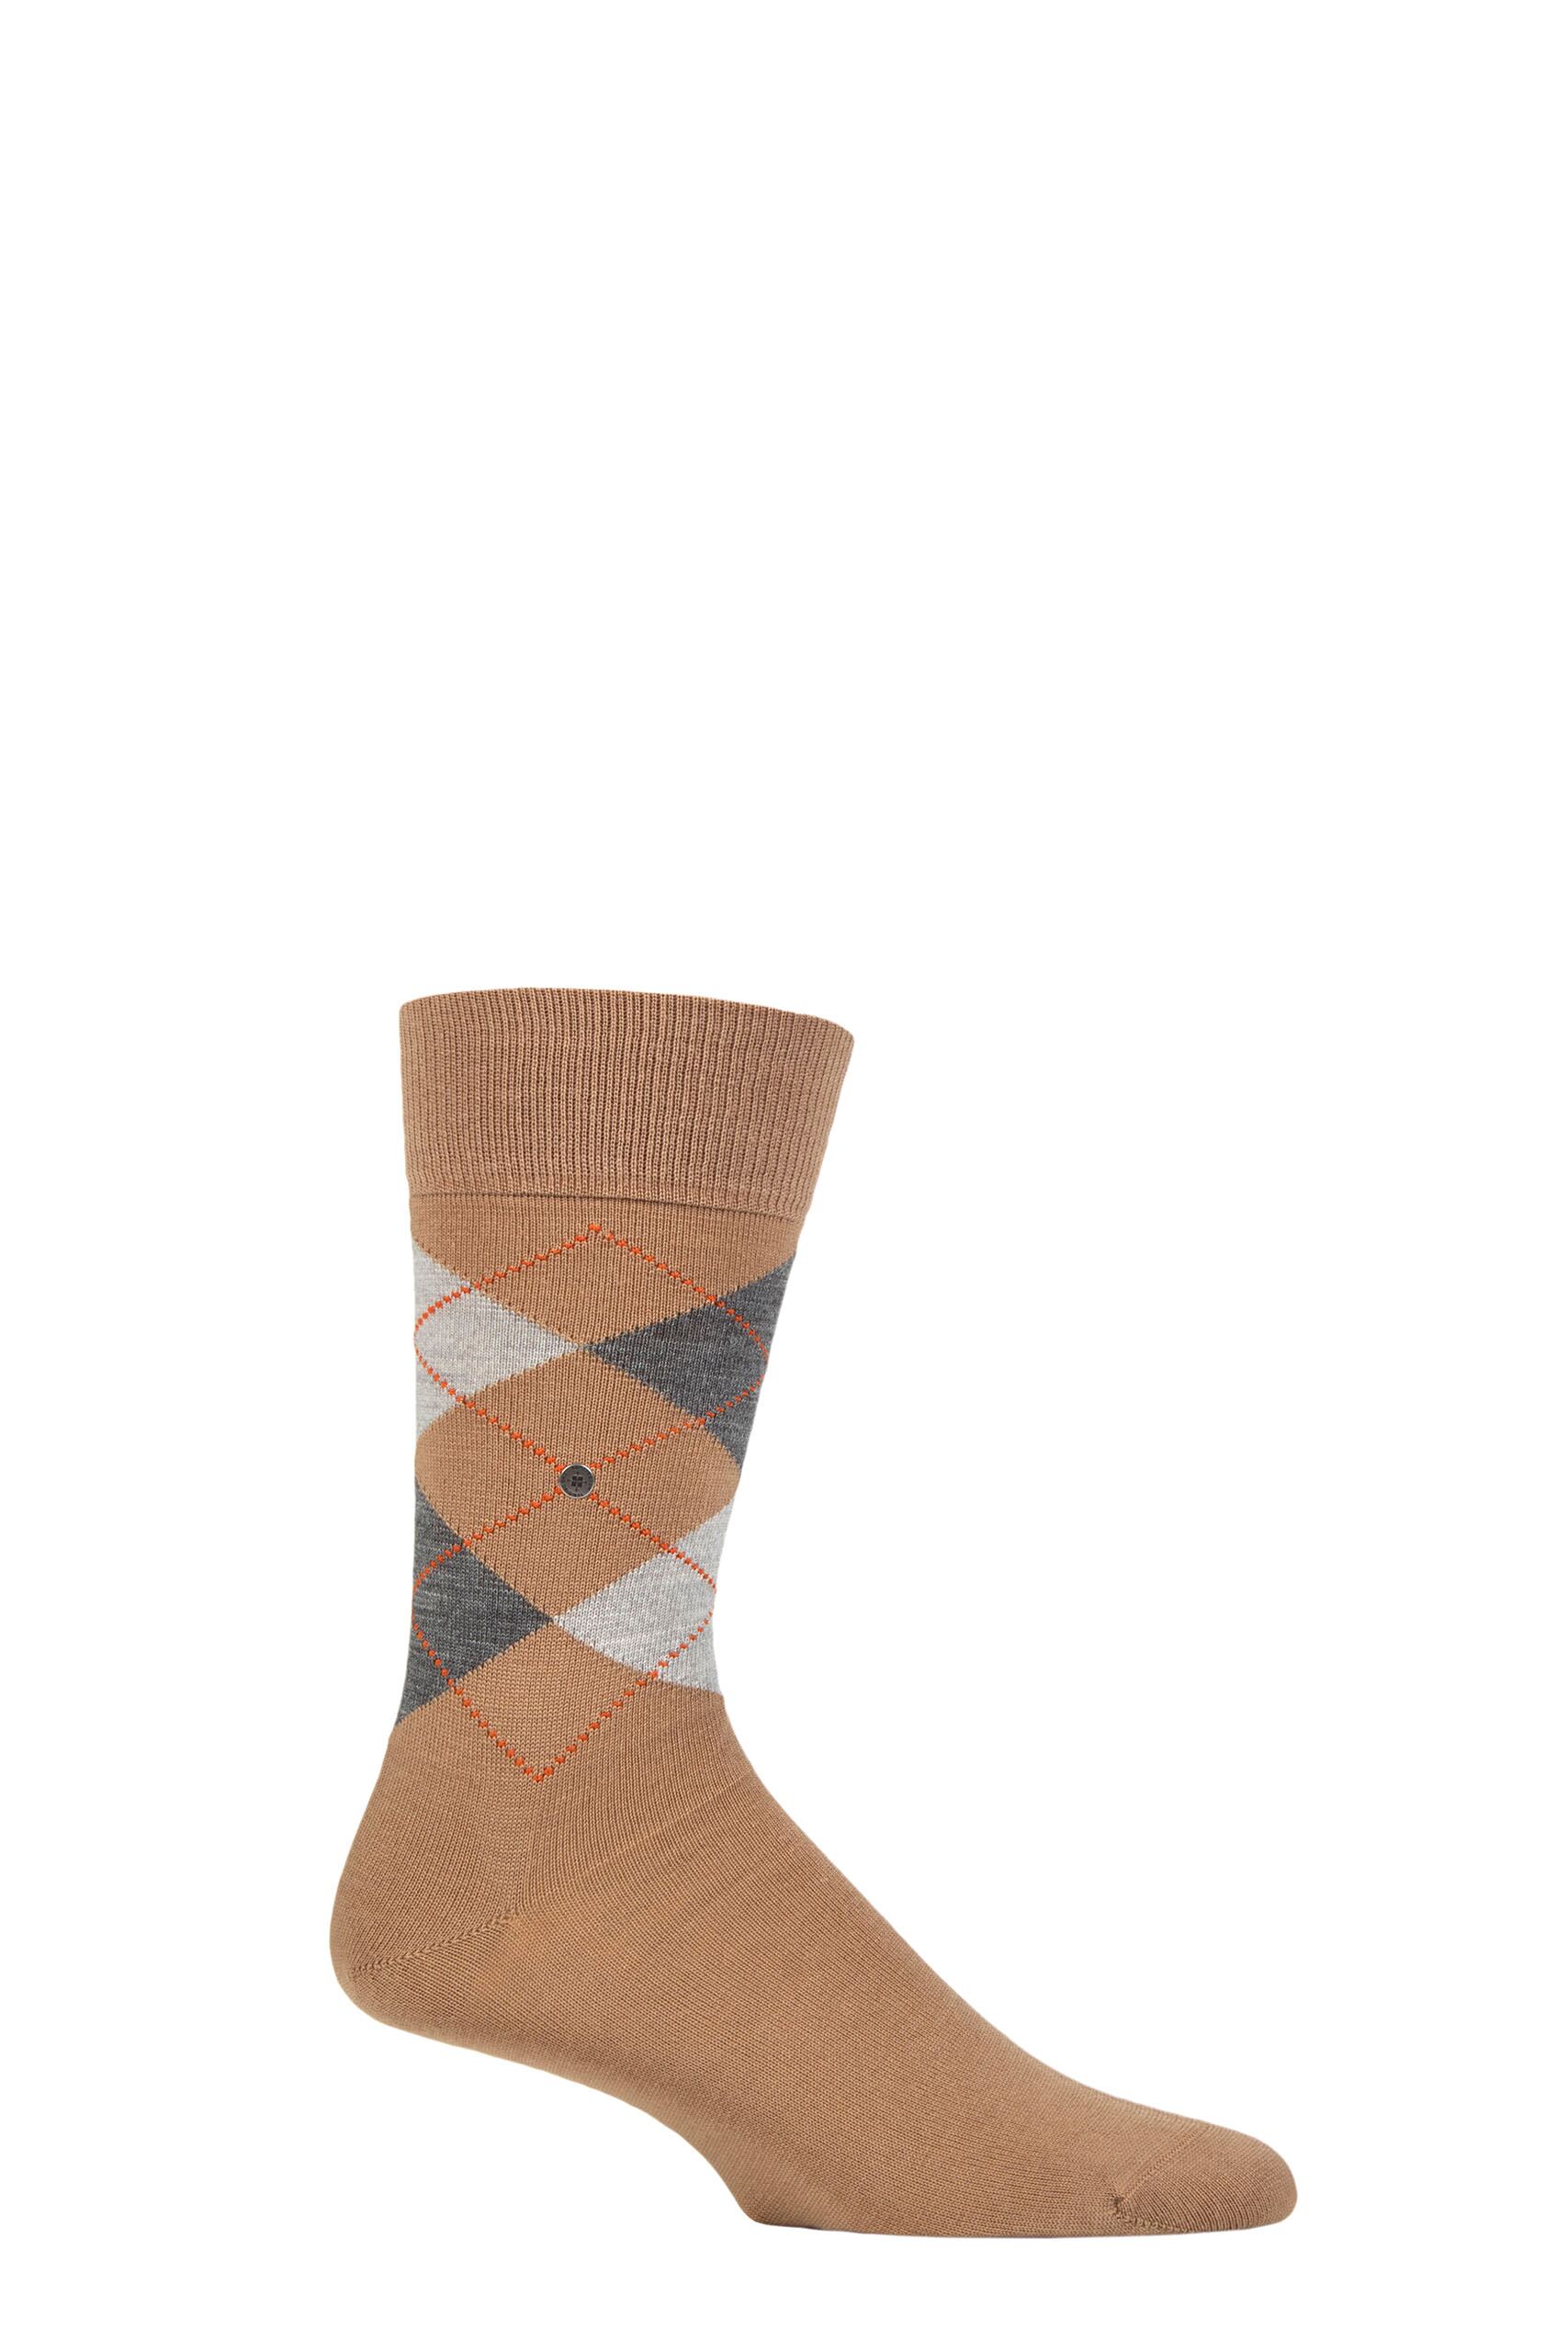 Mens 1 Pair Burlington Edinburgh Virgin Wool Argyle Socks Sand / Grey 6.5-11 Mens